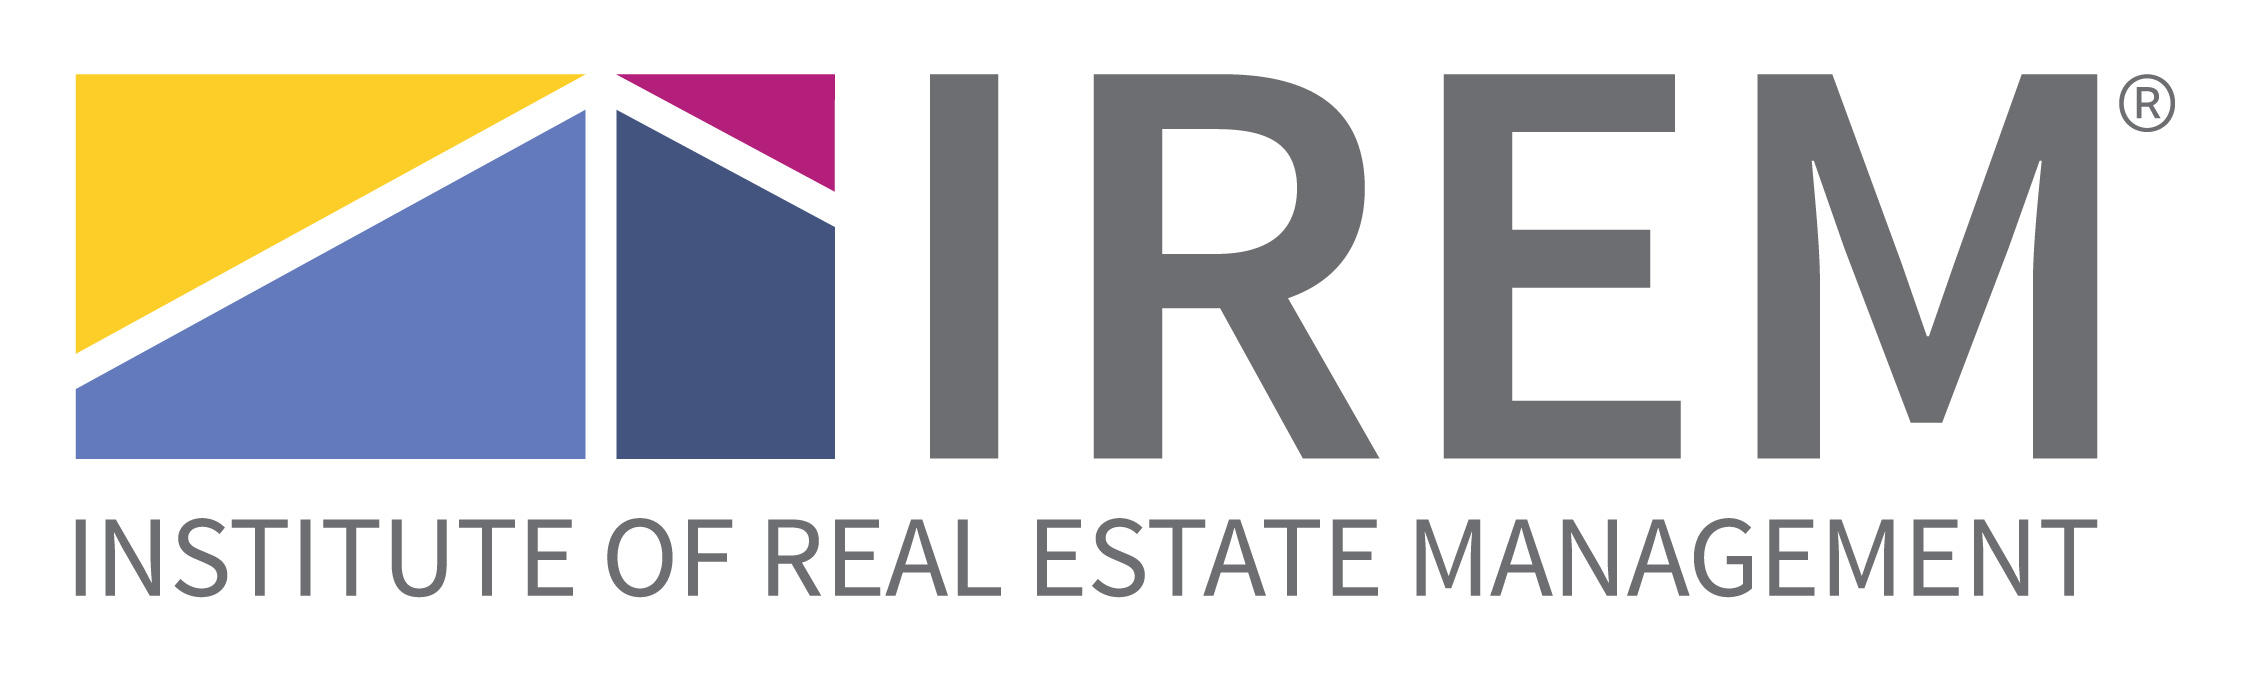 IREM (International Real Estate Managers)